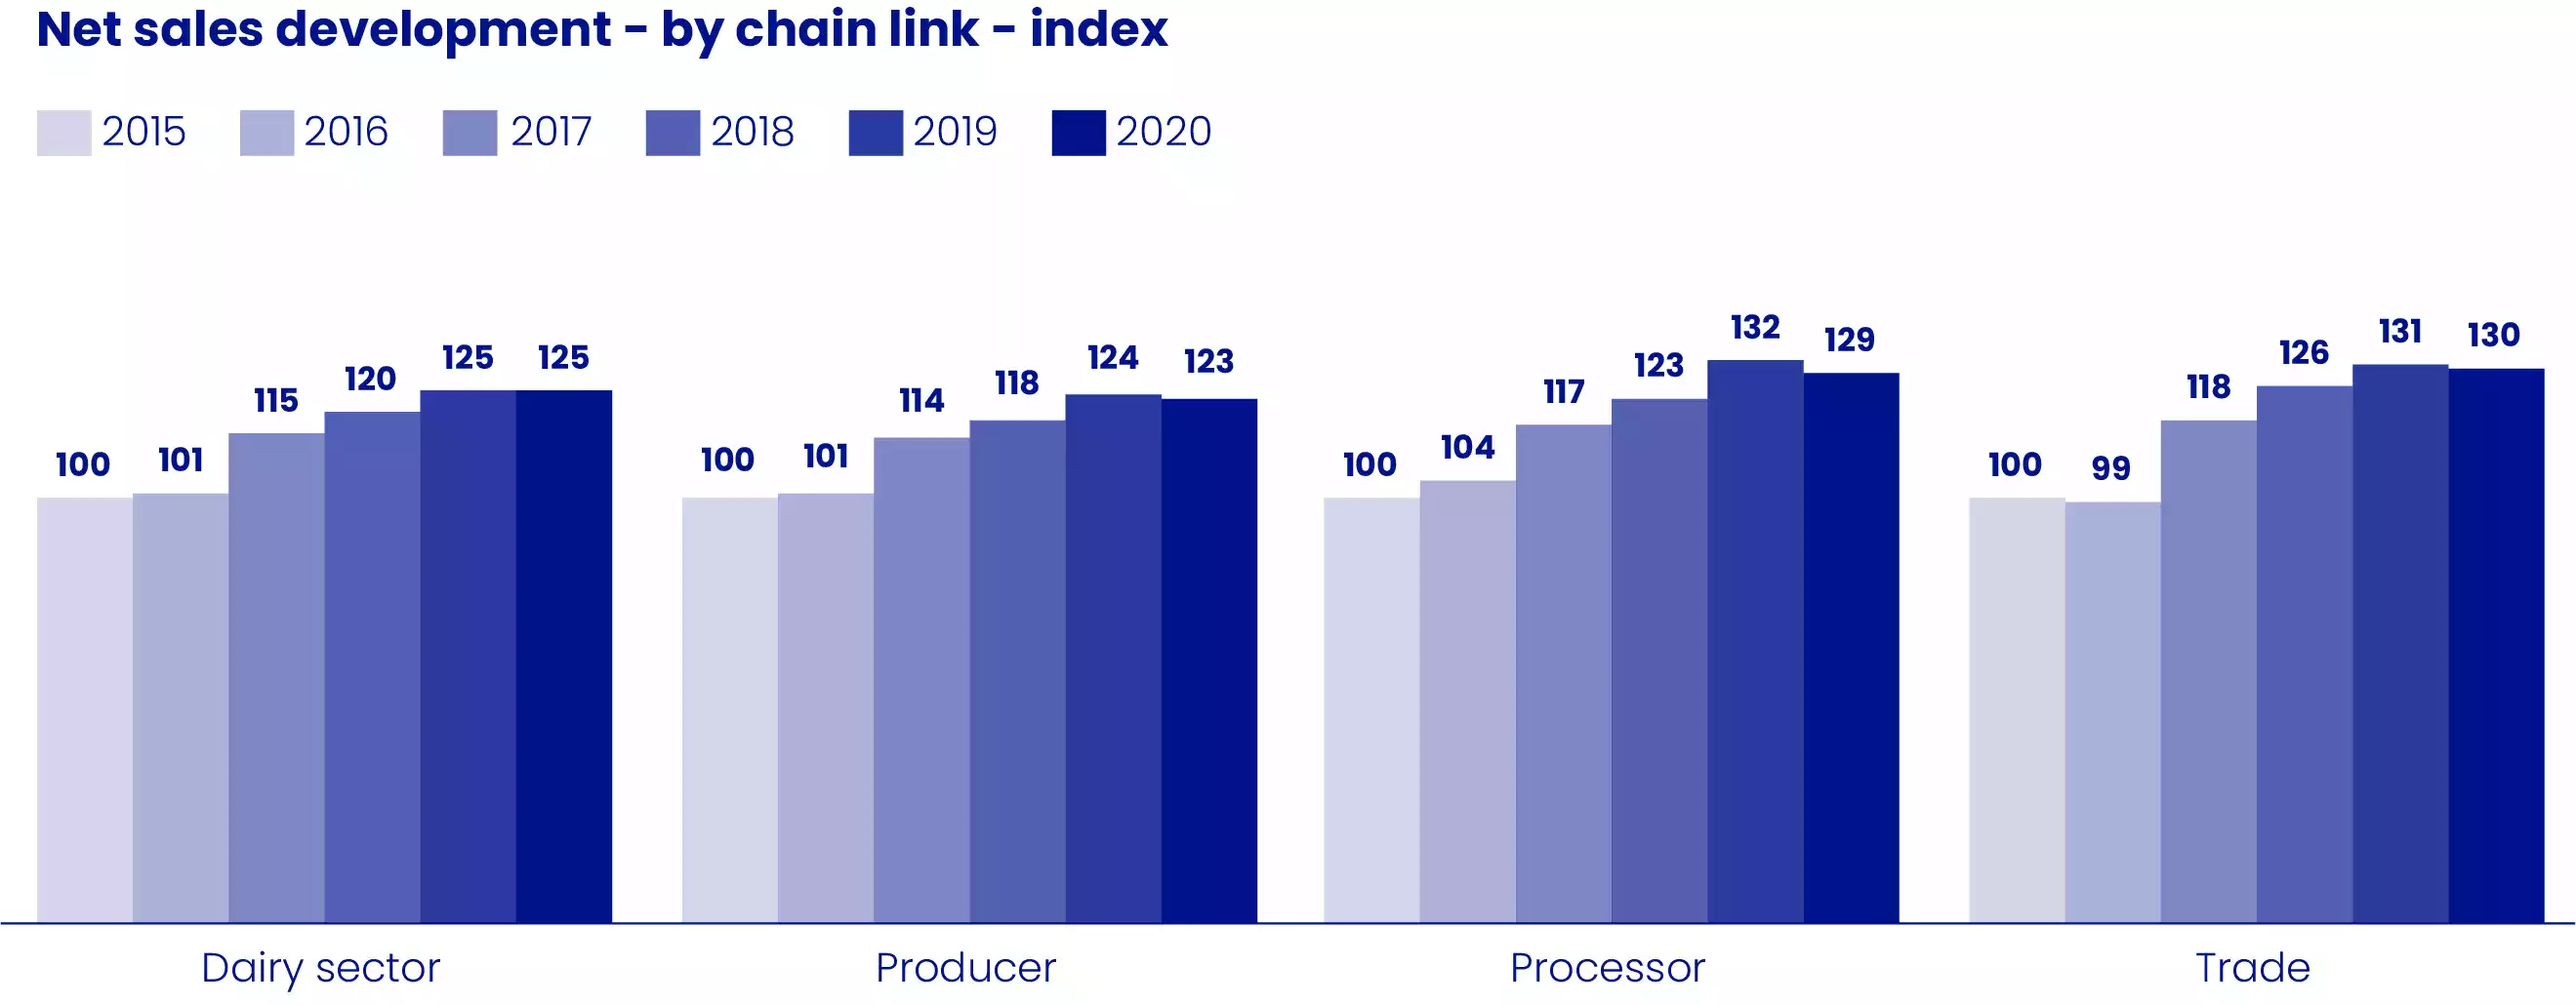 Net Sales Development - by chain link - index